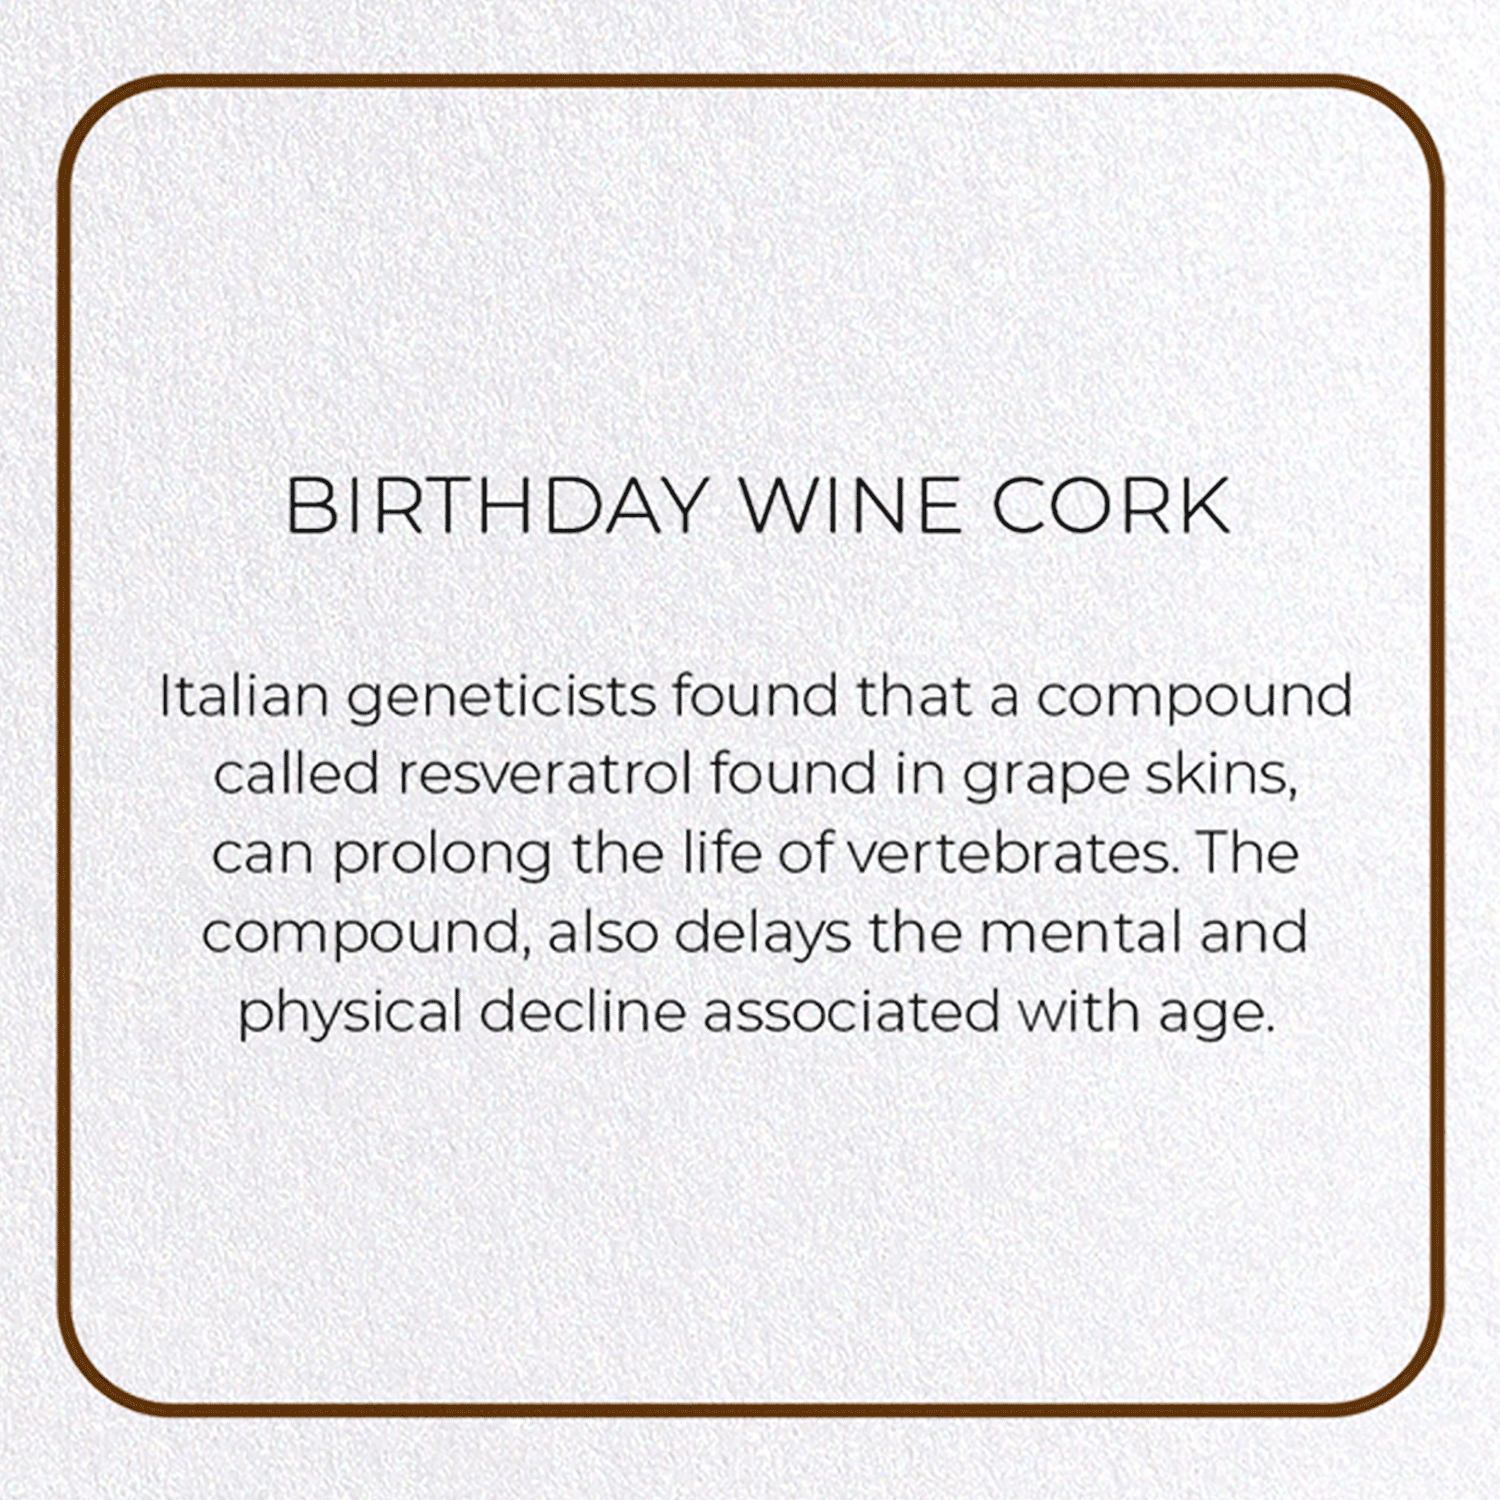 BIRTHDAY WINE CORK: Photo Greeting Card